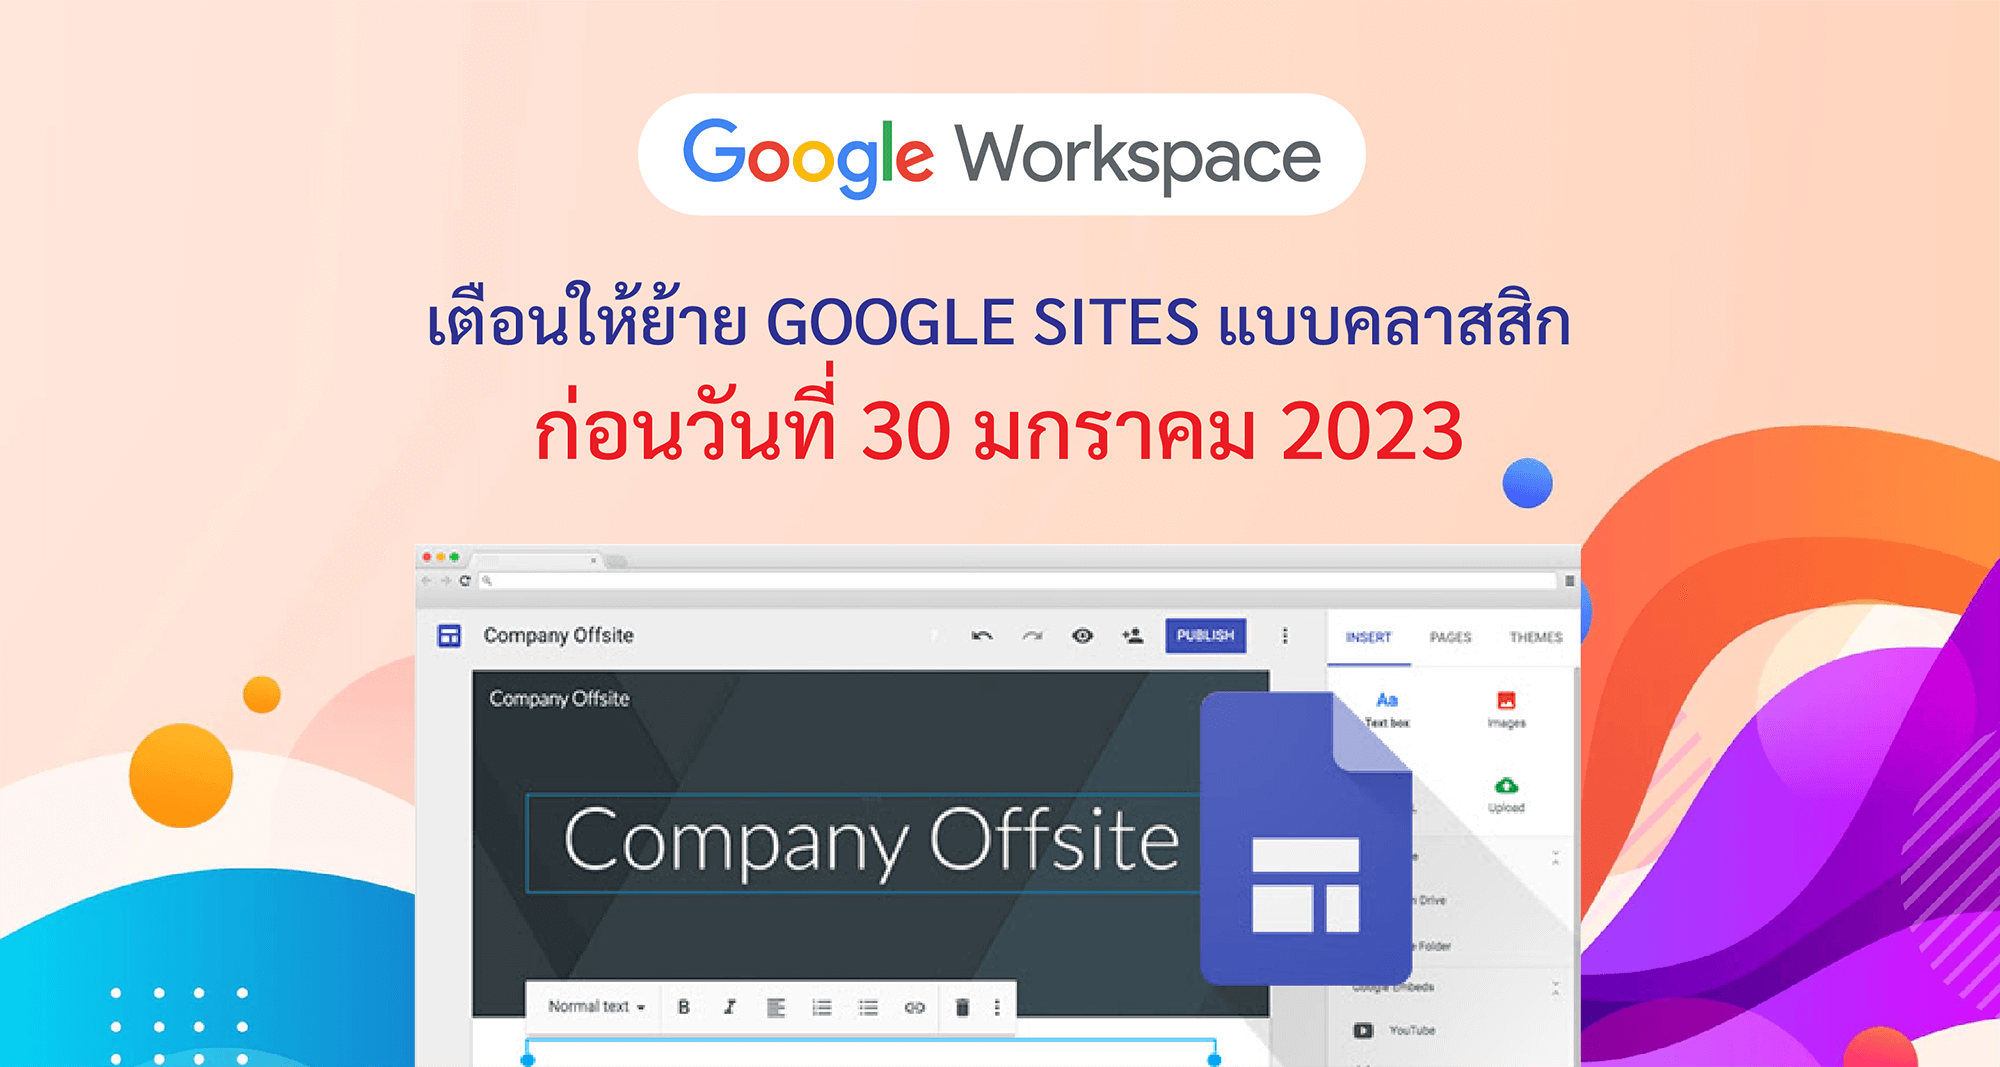 Google Workspace เตือนให้ย้าย Google Sites แบบคลาสสิก ก่อนวันที่ 30 มกราคม 2023